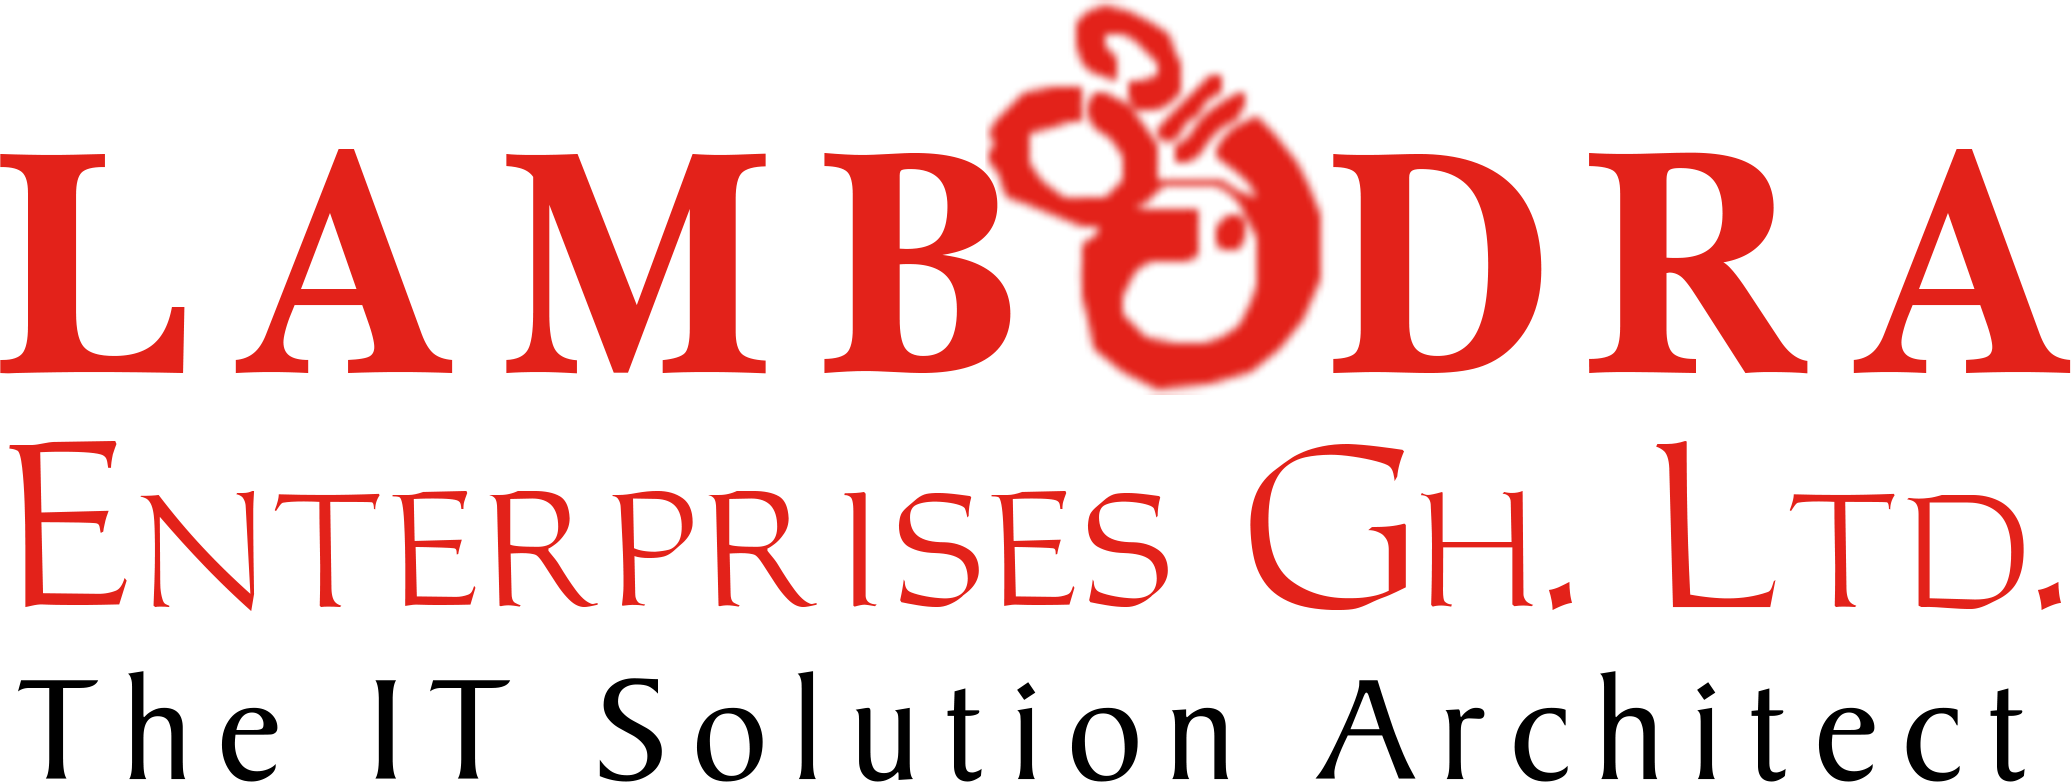 Lambodra Enterprises Gh Ltd